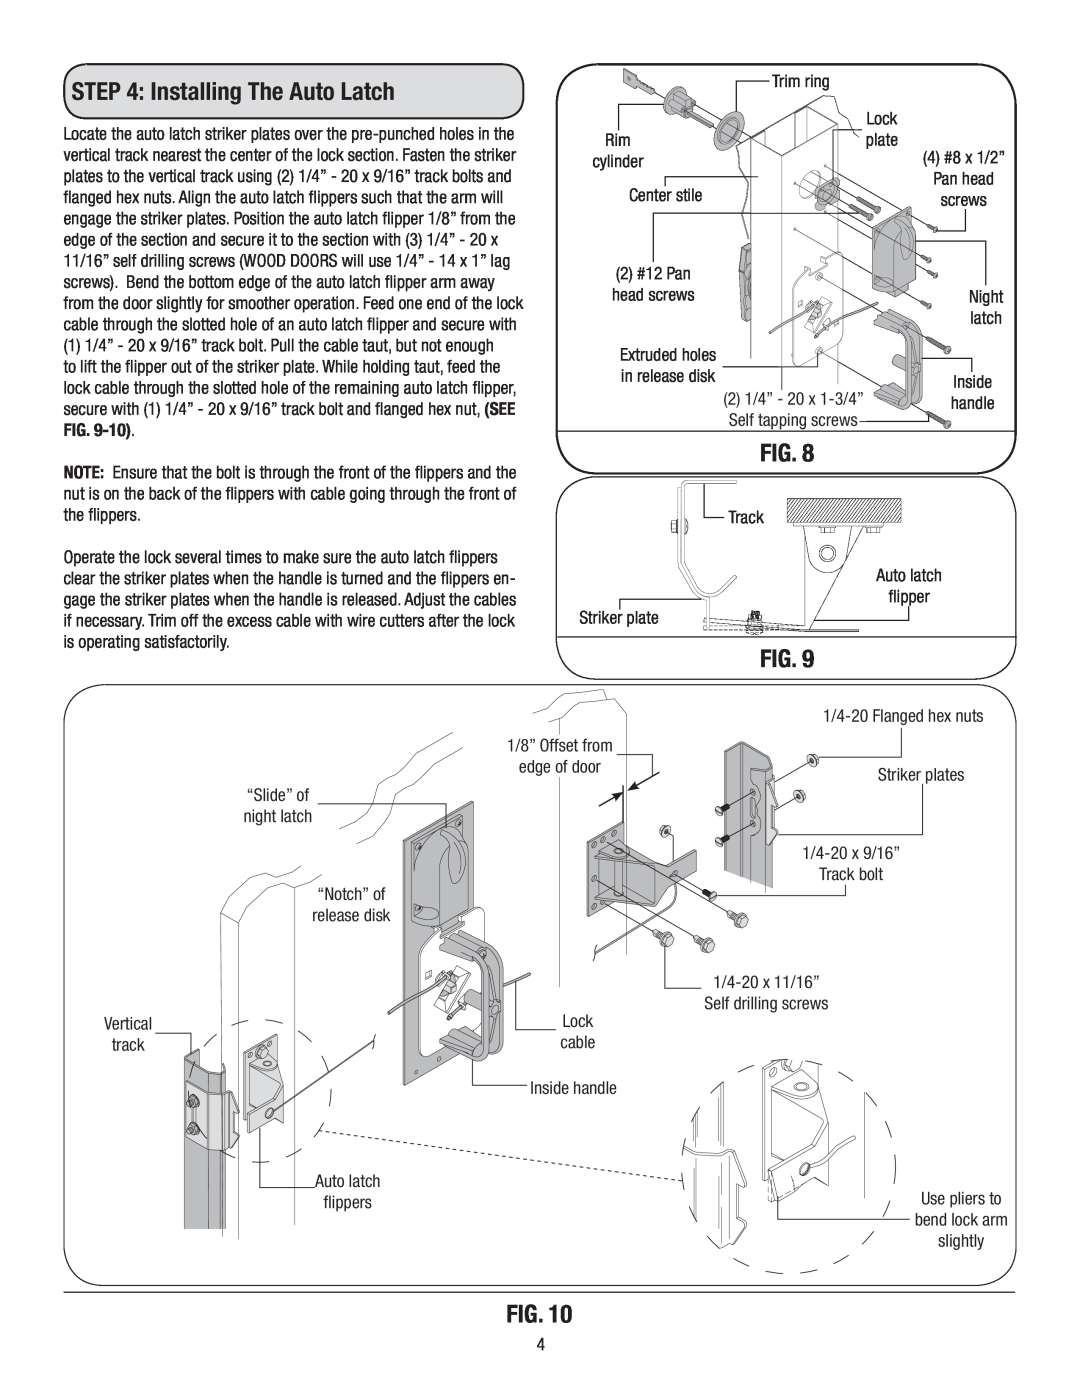 Wayne-Dalton 5000, 9700, 8000, 9800, 9000 installation instructions Installing The Auto Latch 